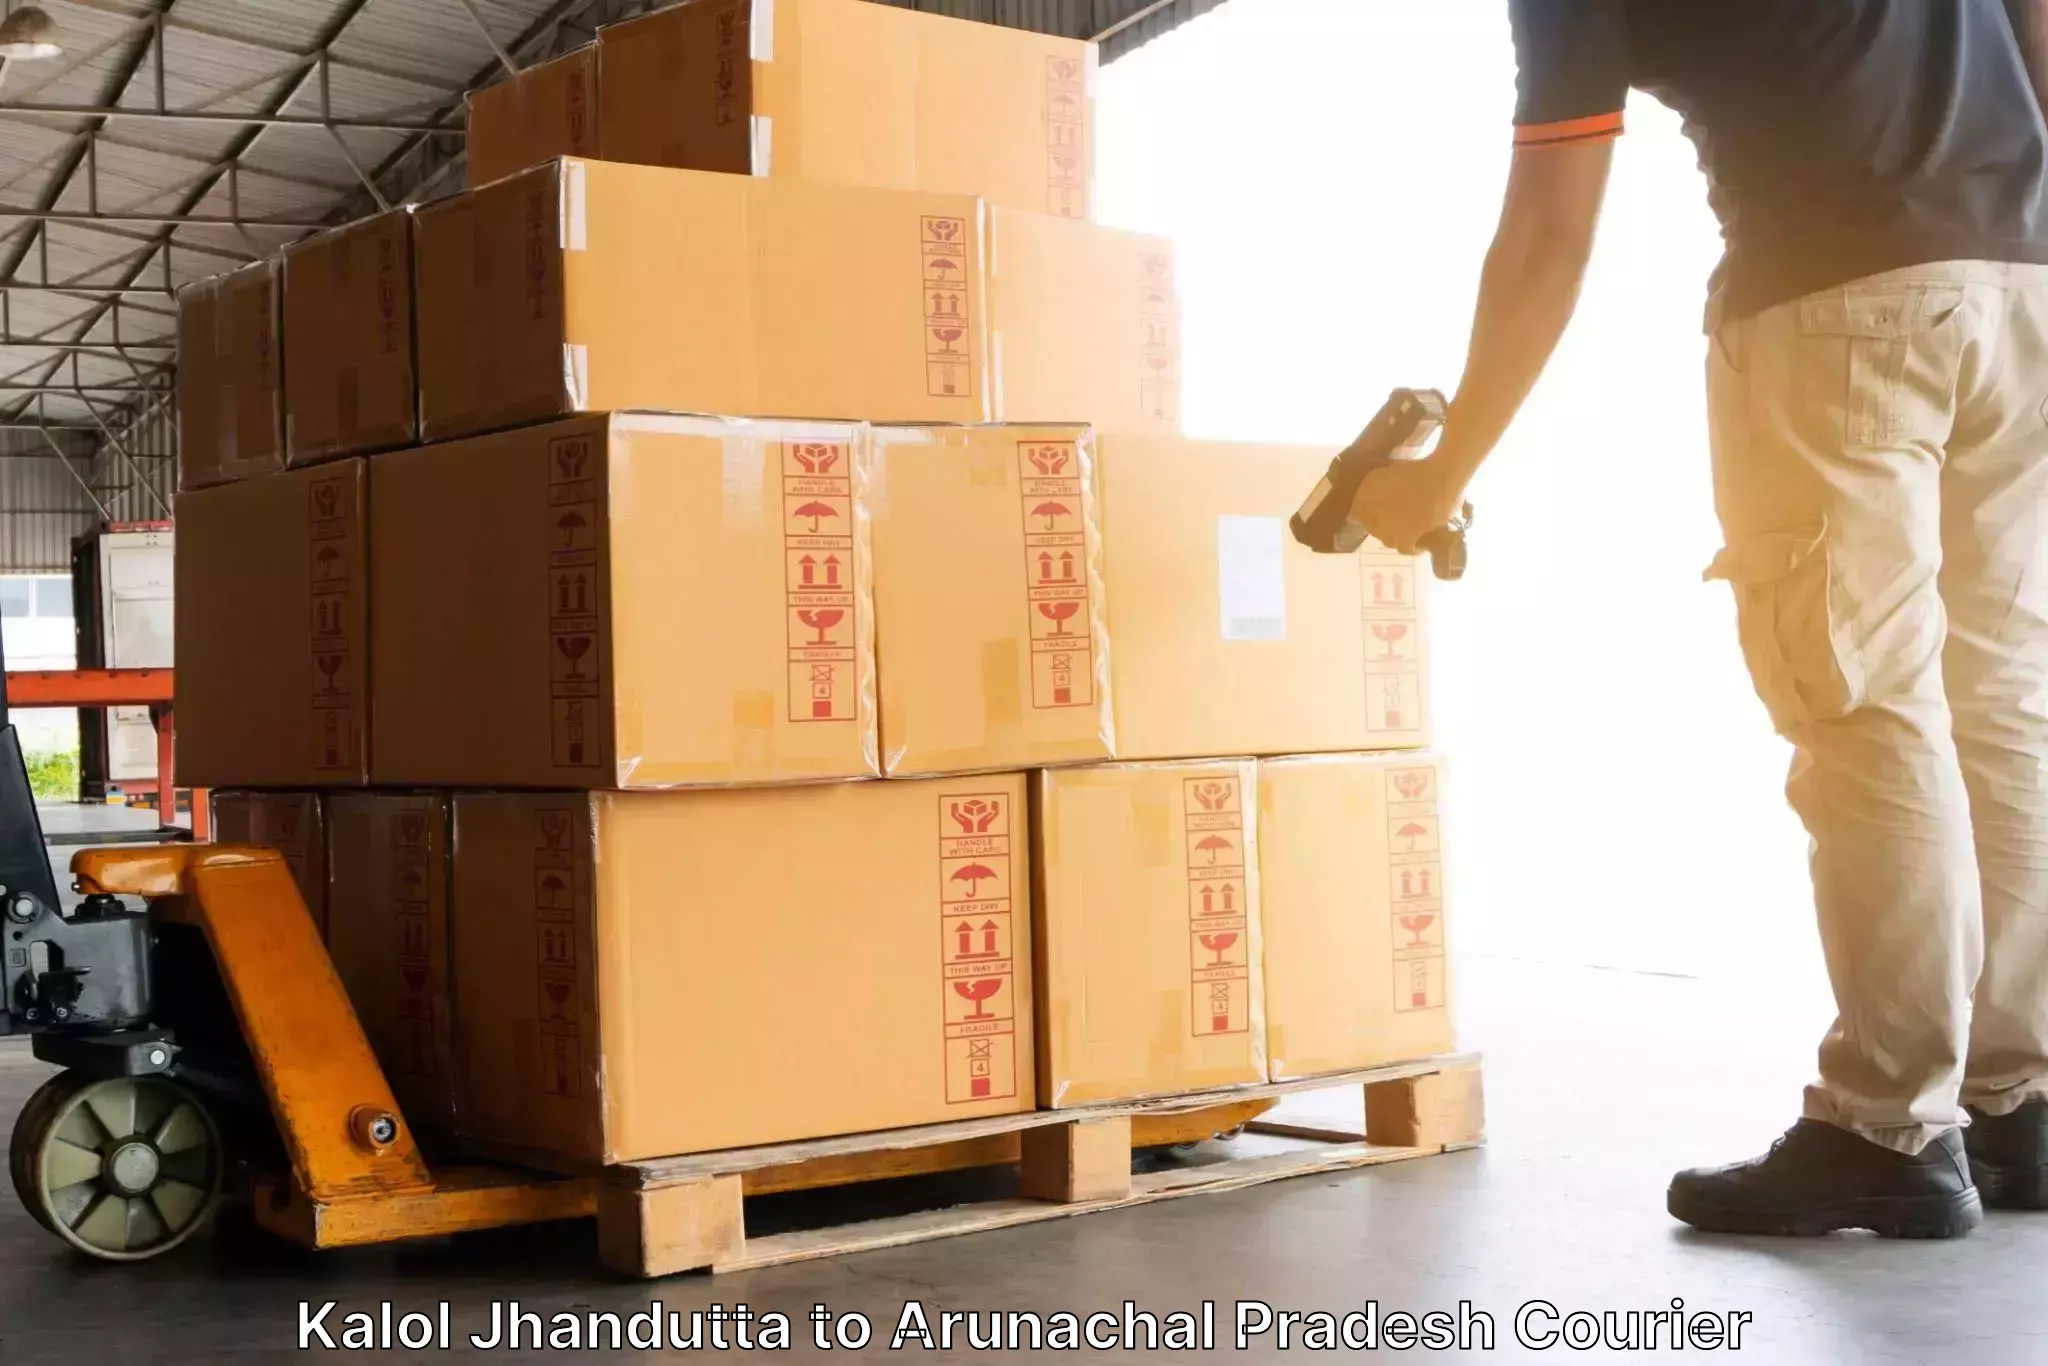 Logistics service provider Kalol Jhandutta to Deomali